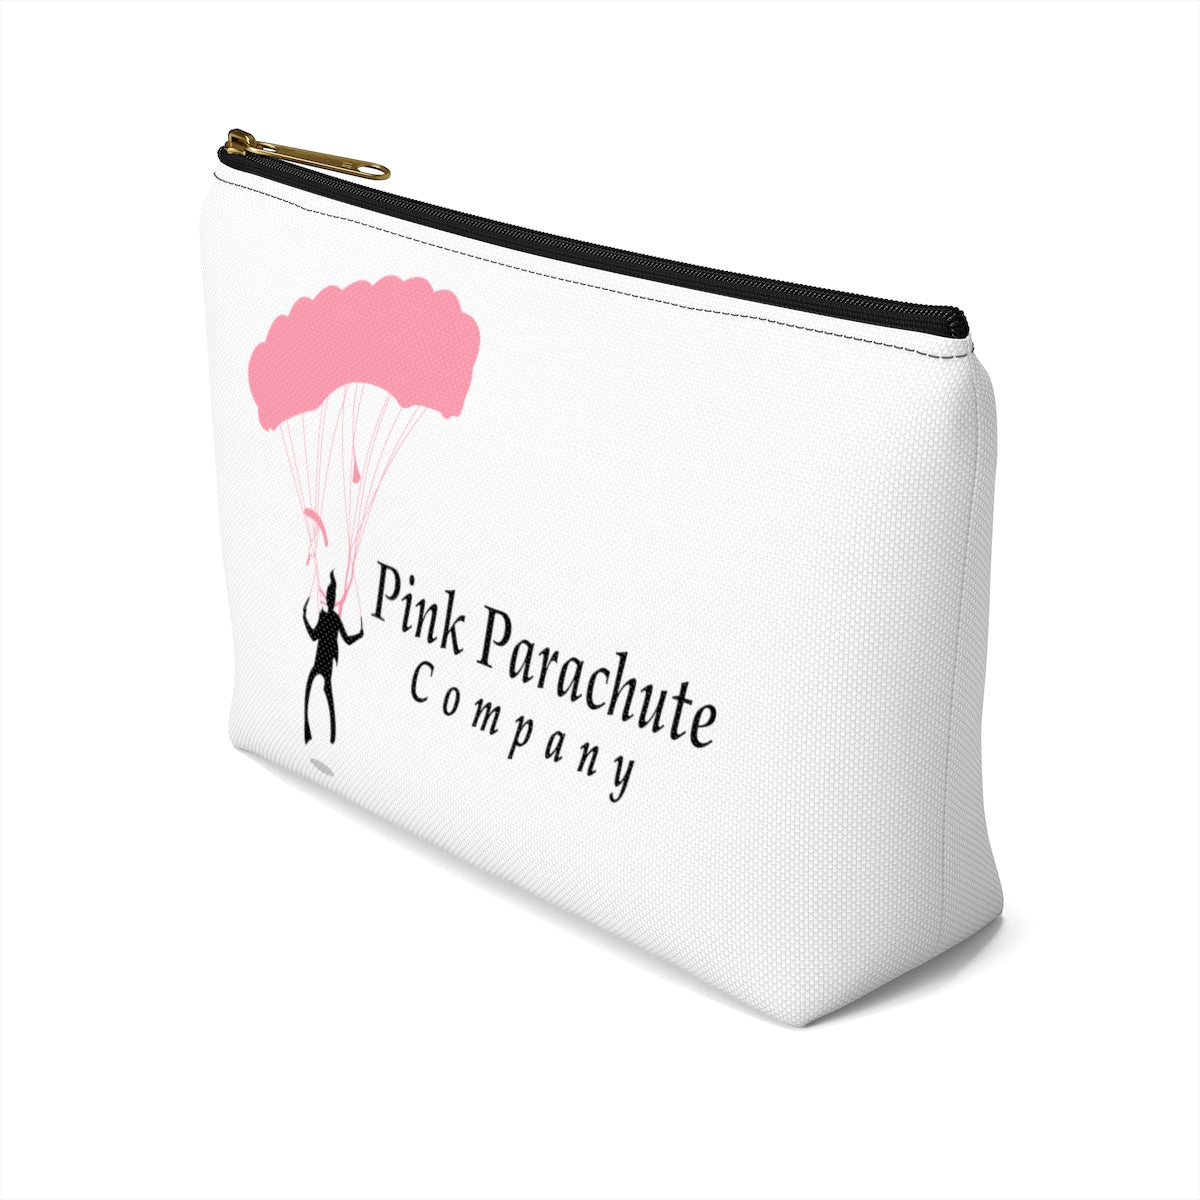 Pink Parachute Company Logo Pony Style - Accessory Pouch w T-bottom